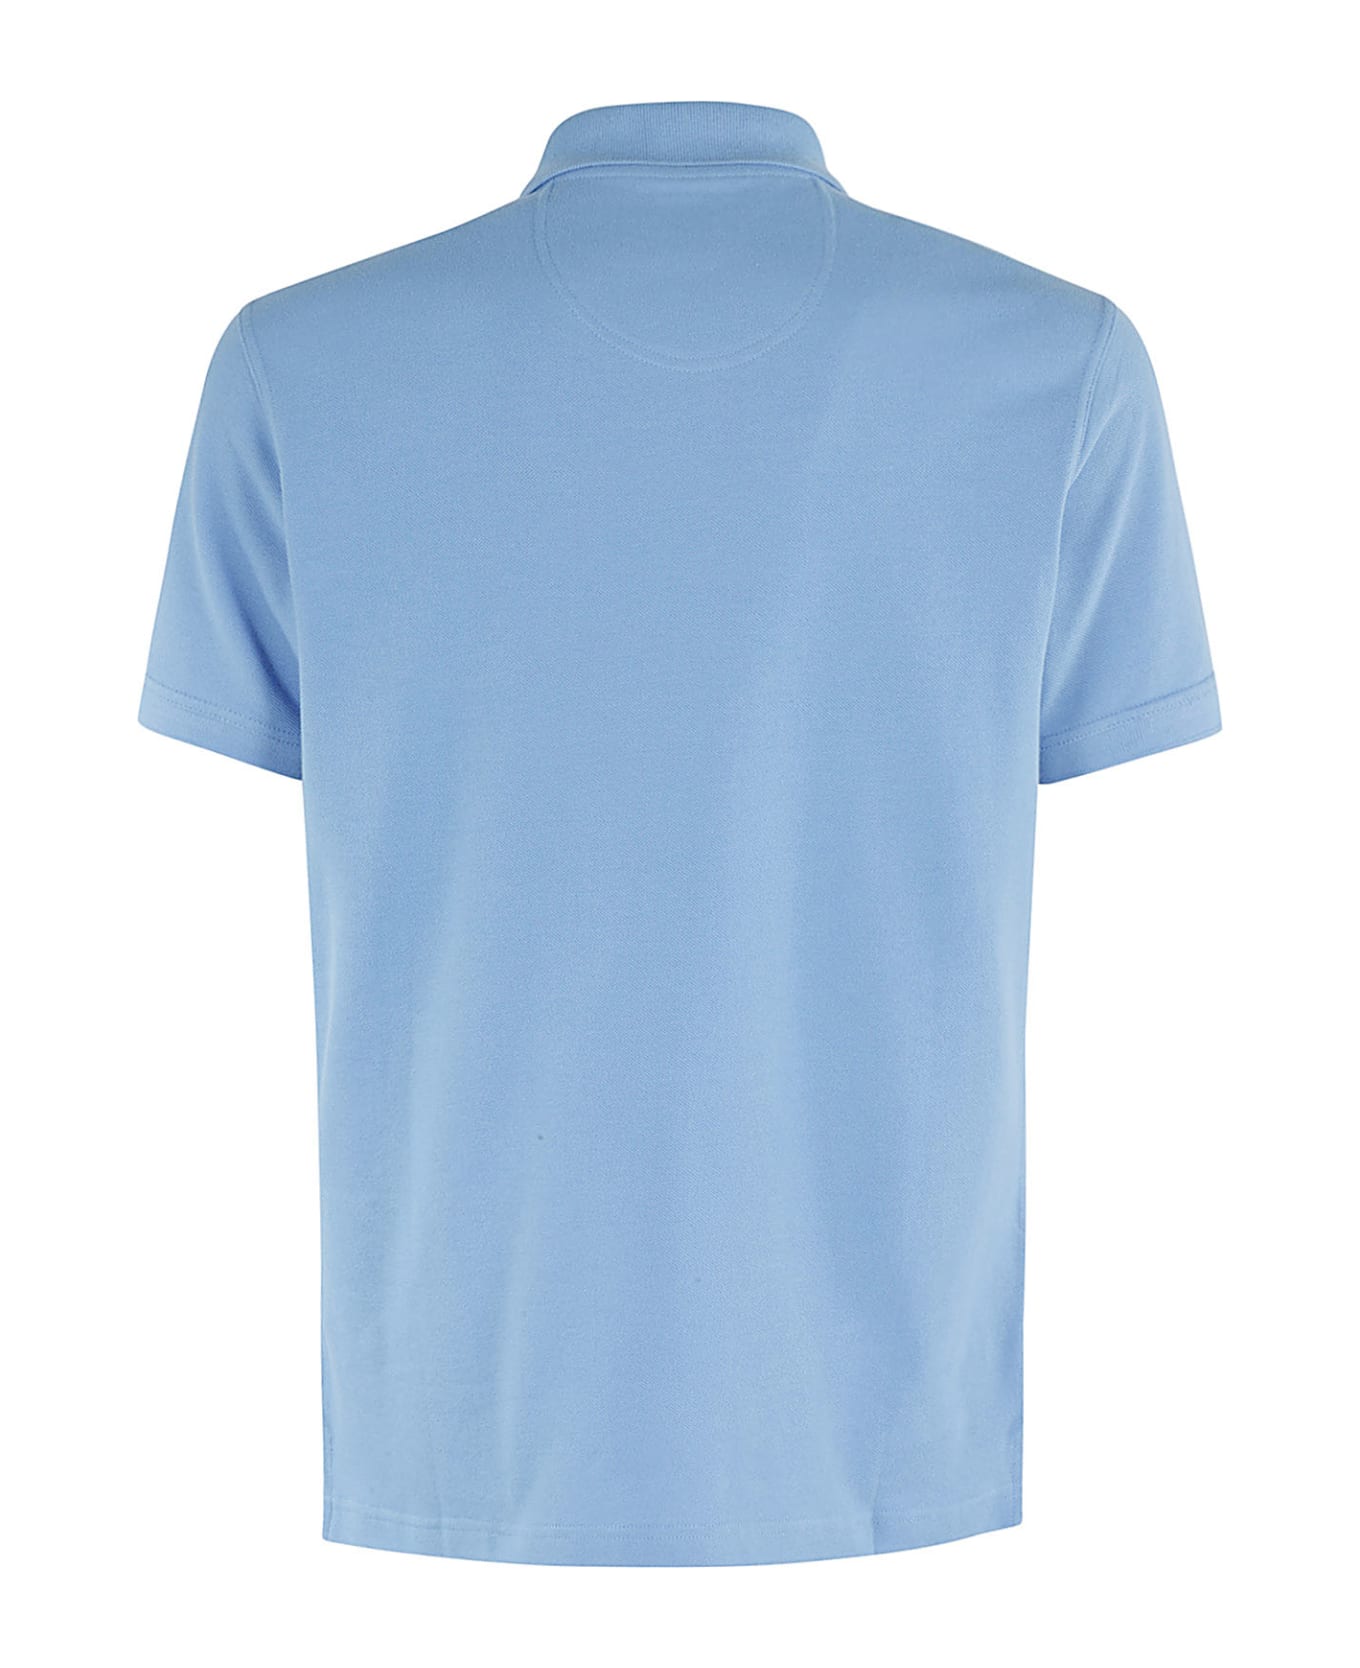 Barbour Tartan Pique - Delft Blue ポロシャツ